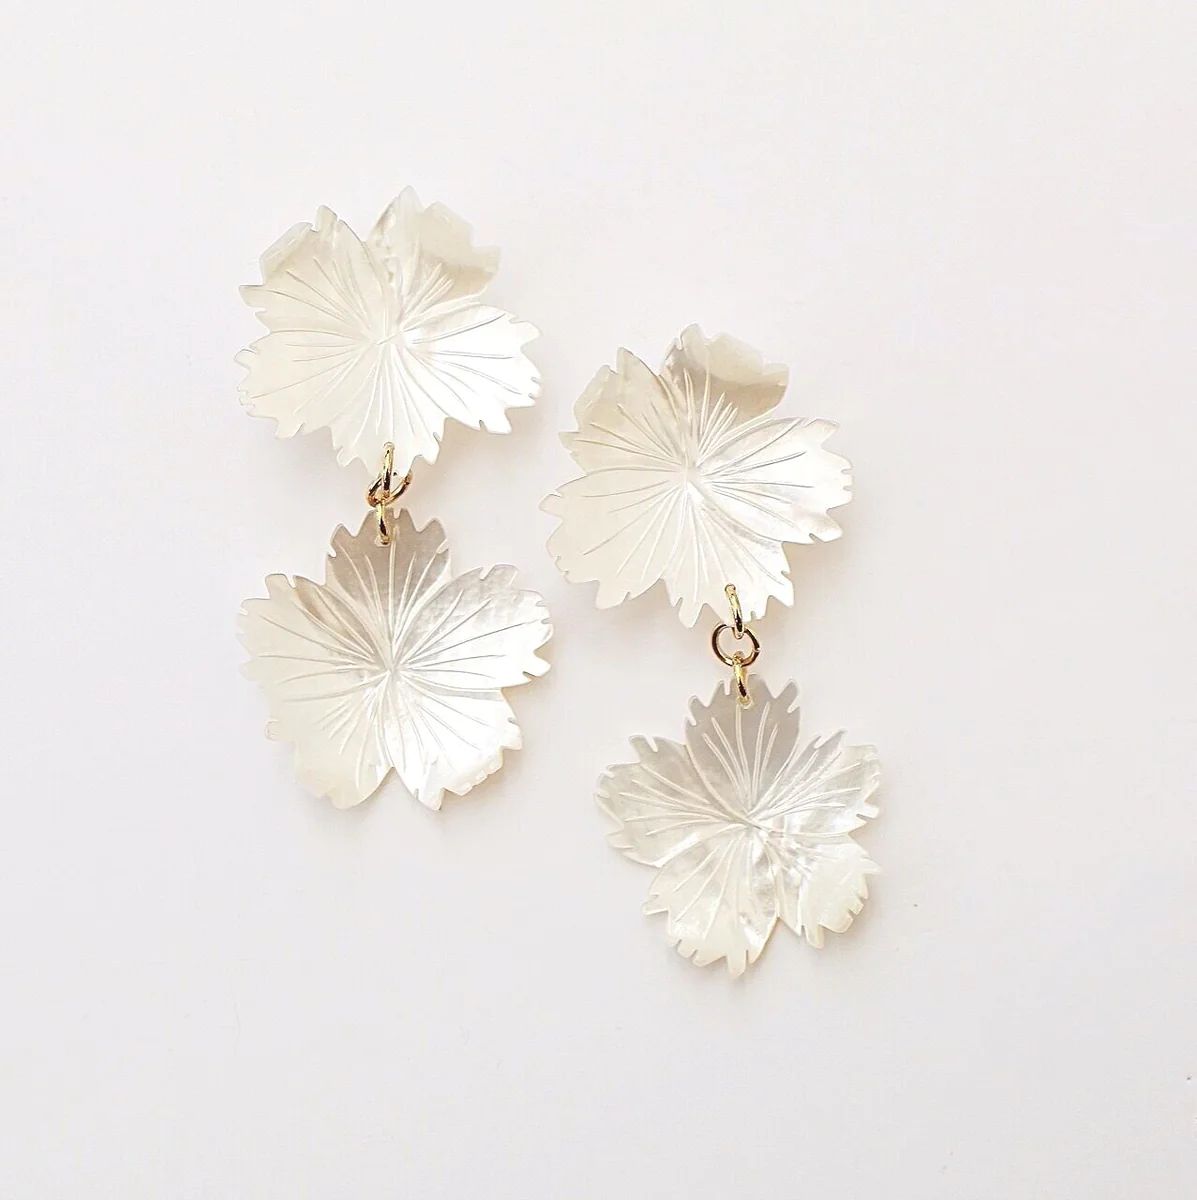 Double Pearl Flower
	
		$0.00 
		$58.00
	
	$58.00

	

								DETAILS:
Pearls
Stainless Steel Po... | Vivian Drew